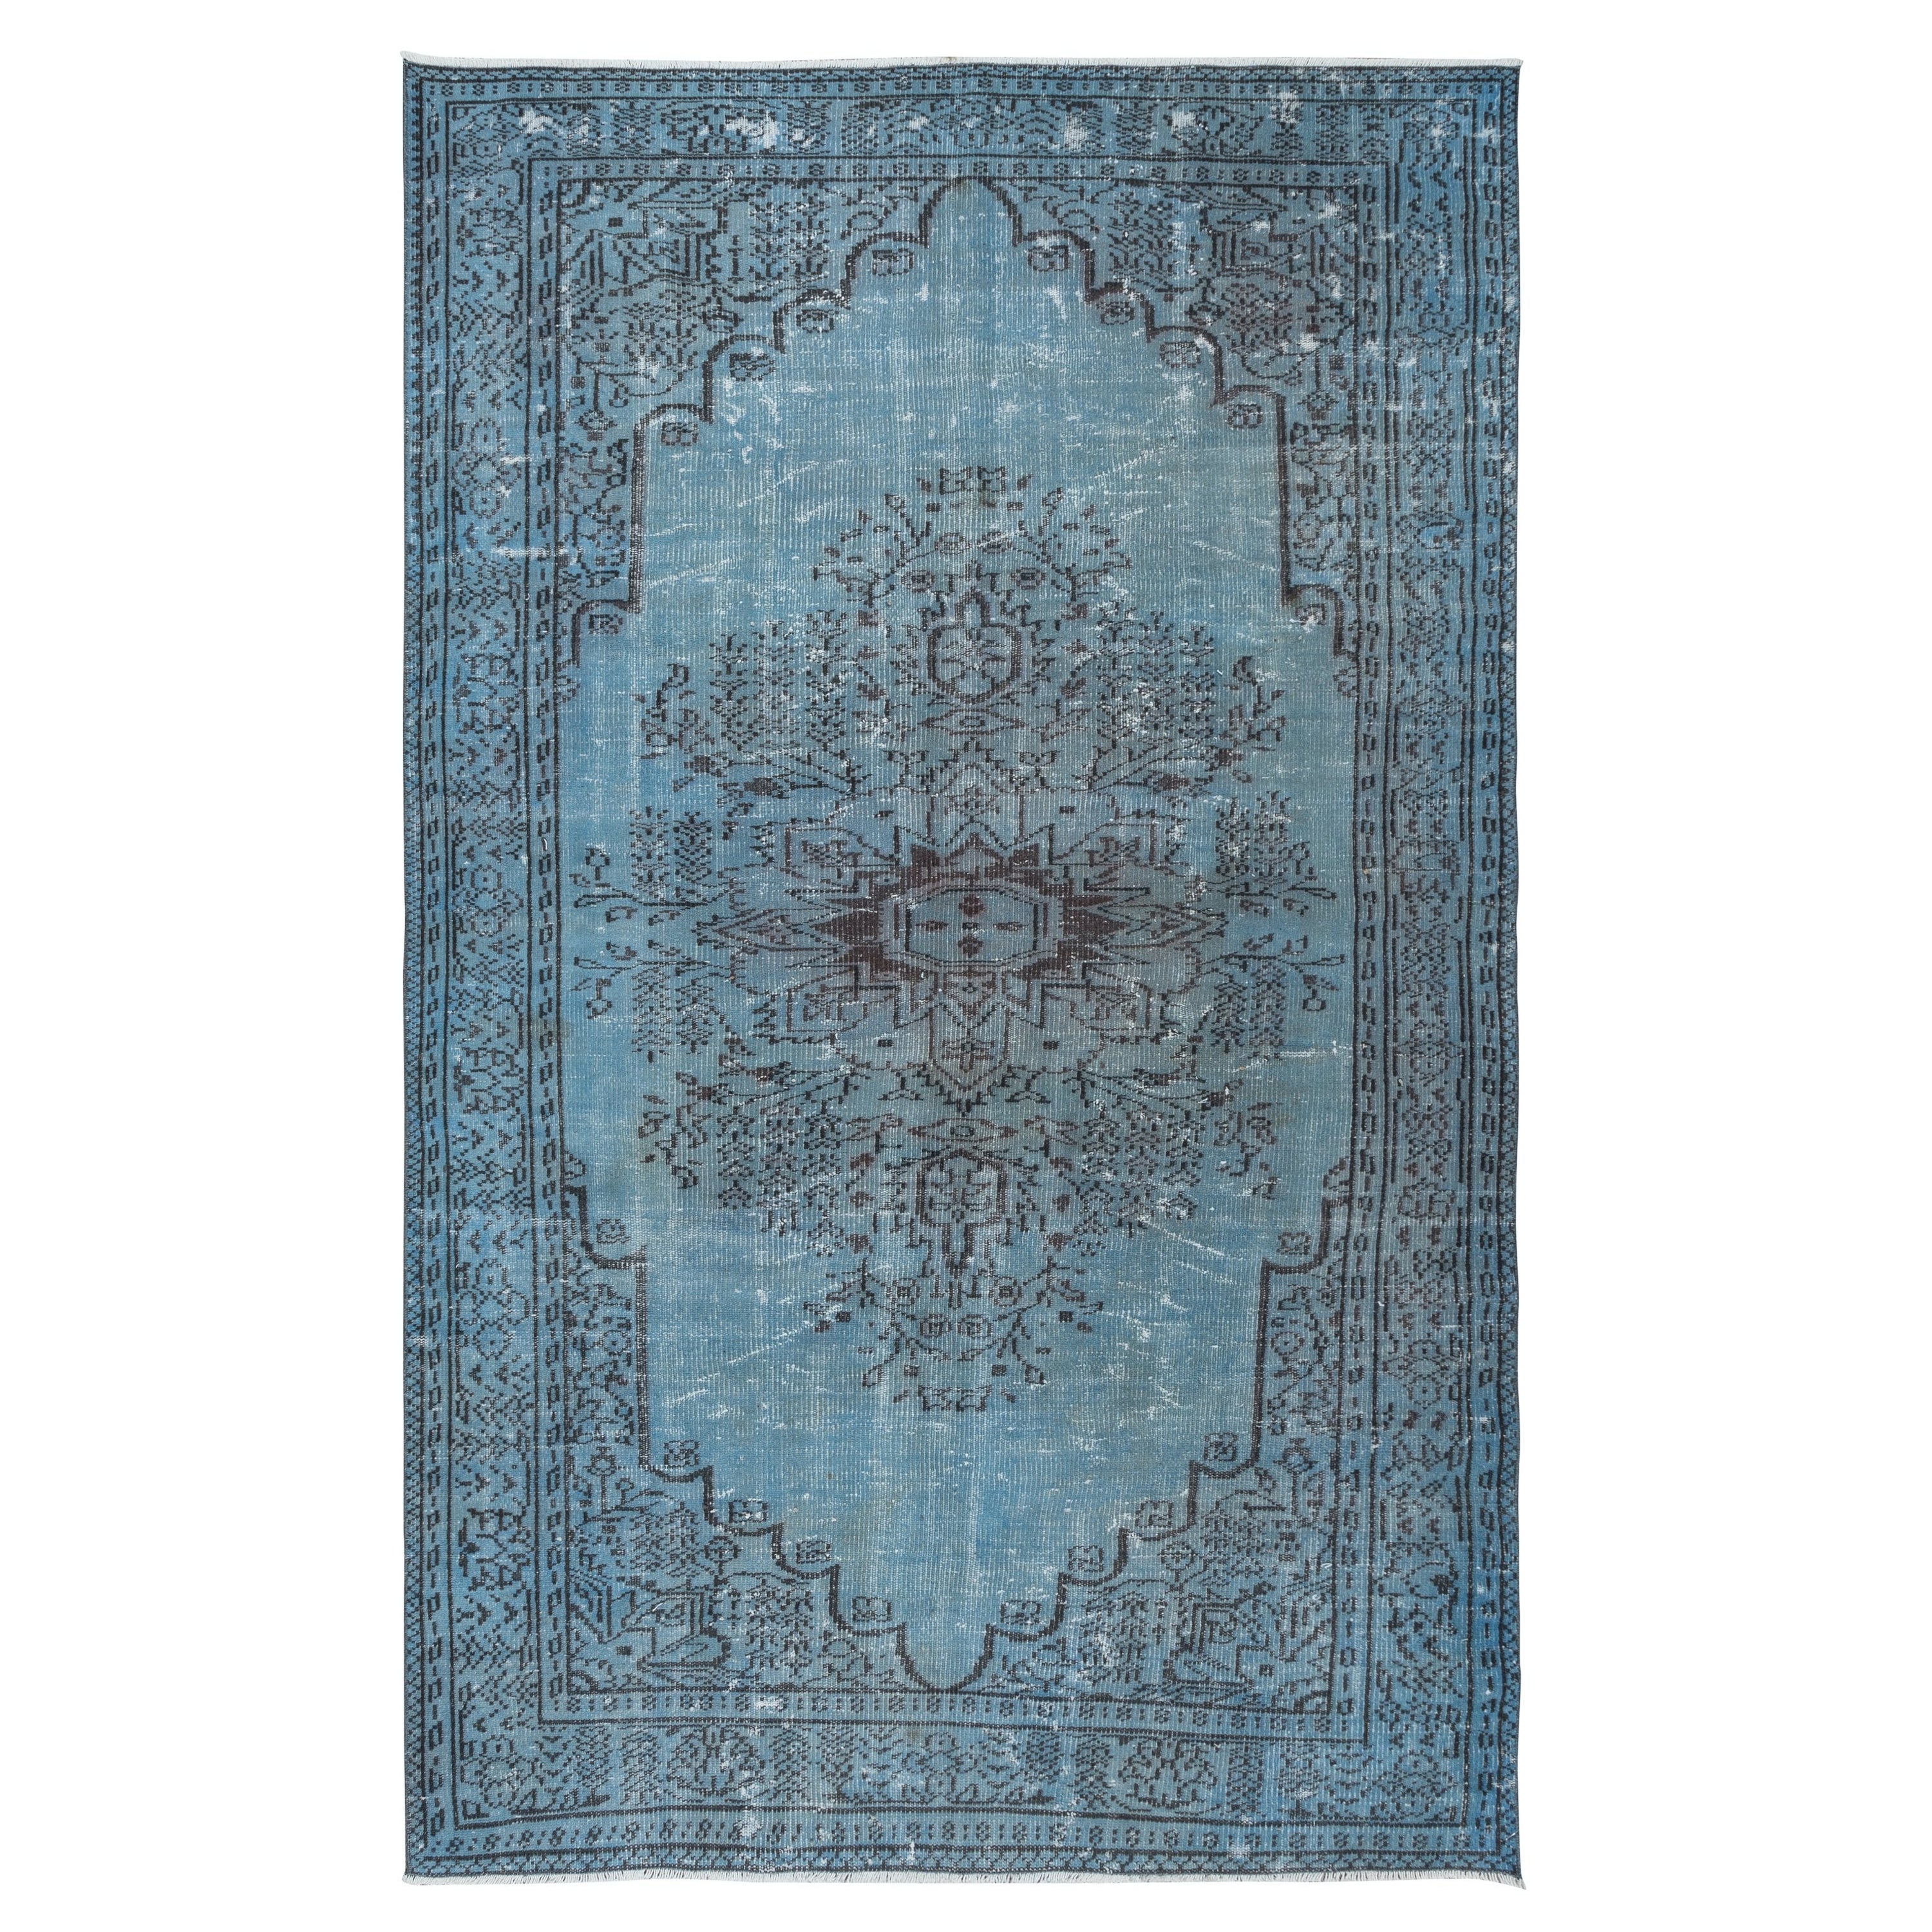 6.2x10 Ft Modern Light Blue Area Rug, Room Size Handmade Overdyed Turkish Carpet